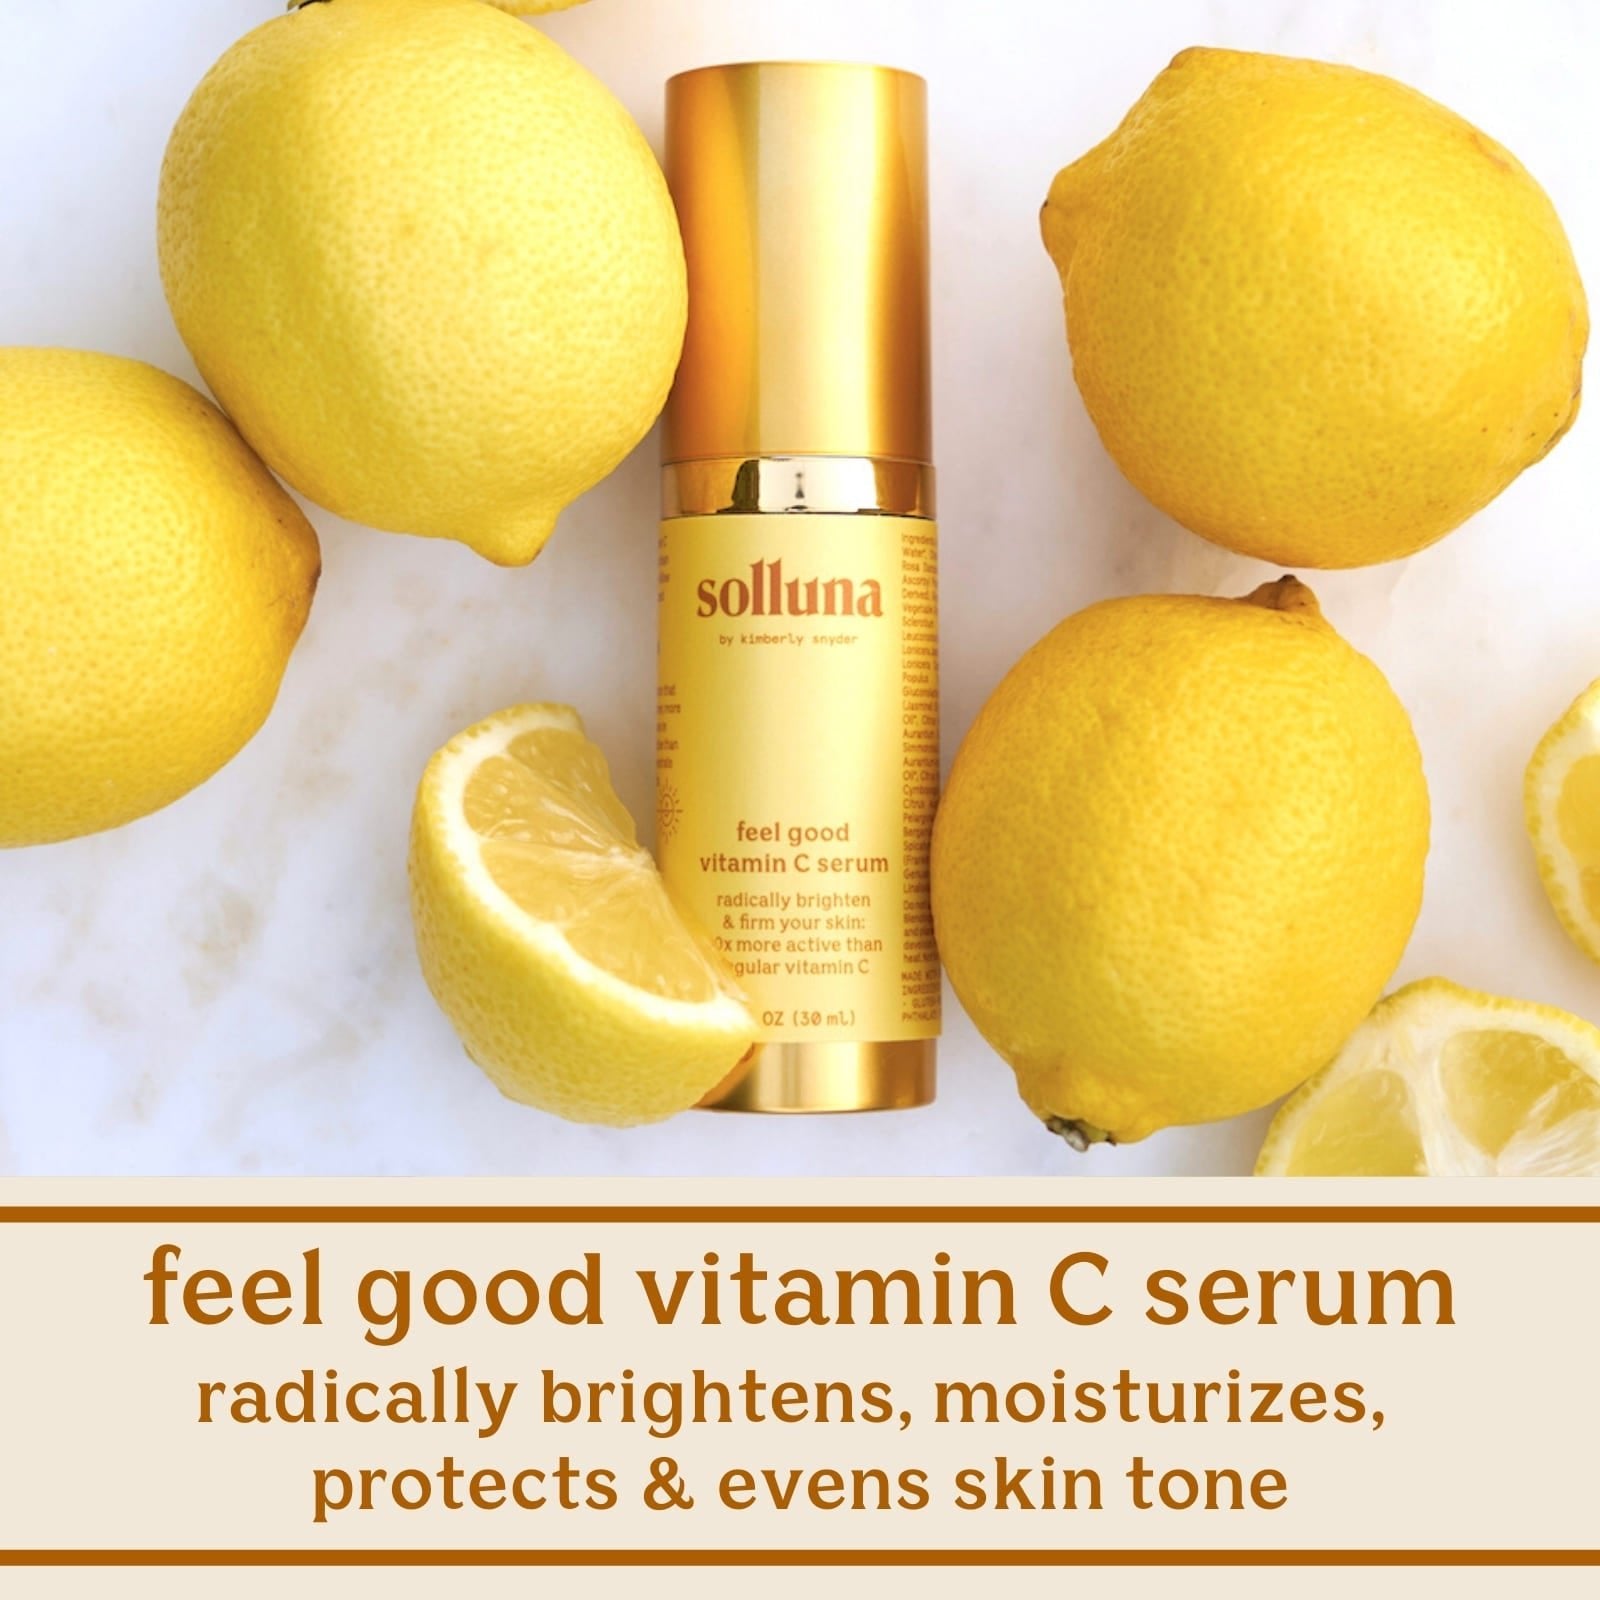 Solluna's Feel Good Vitamin C Serum Radically Brightens, Moisturizes, Protects & Evens Skin Tone